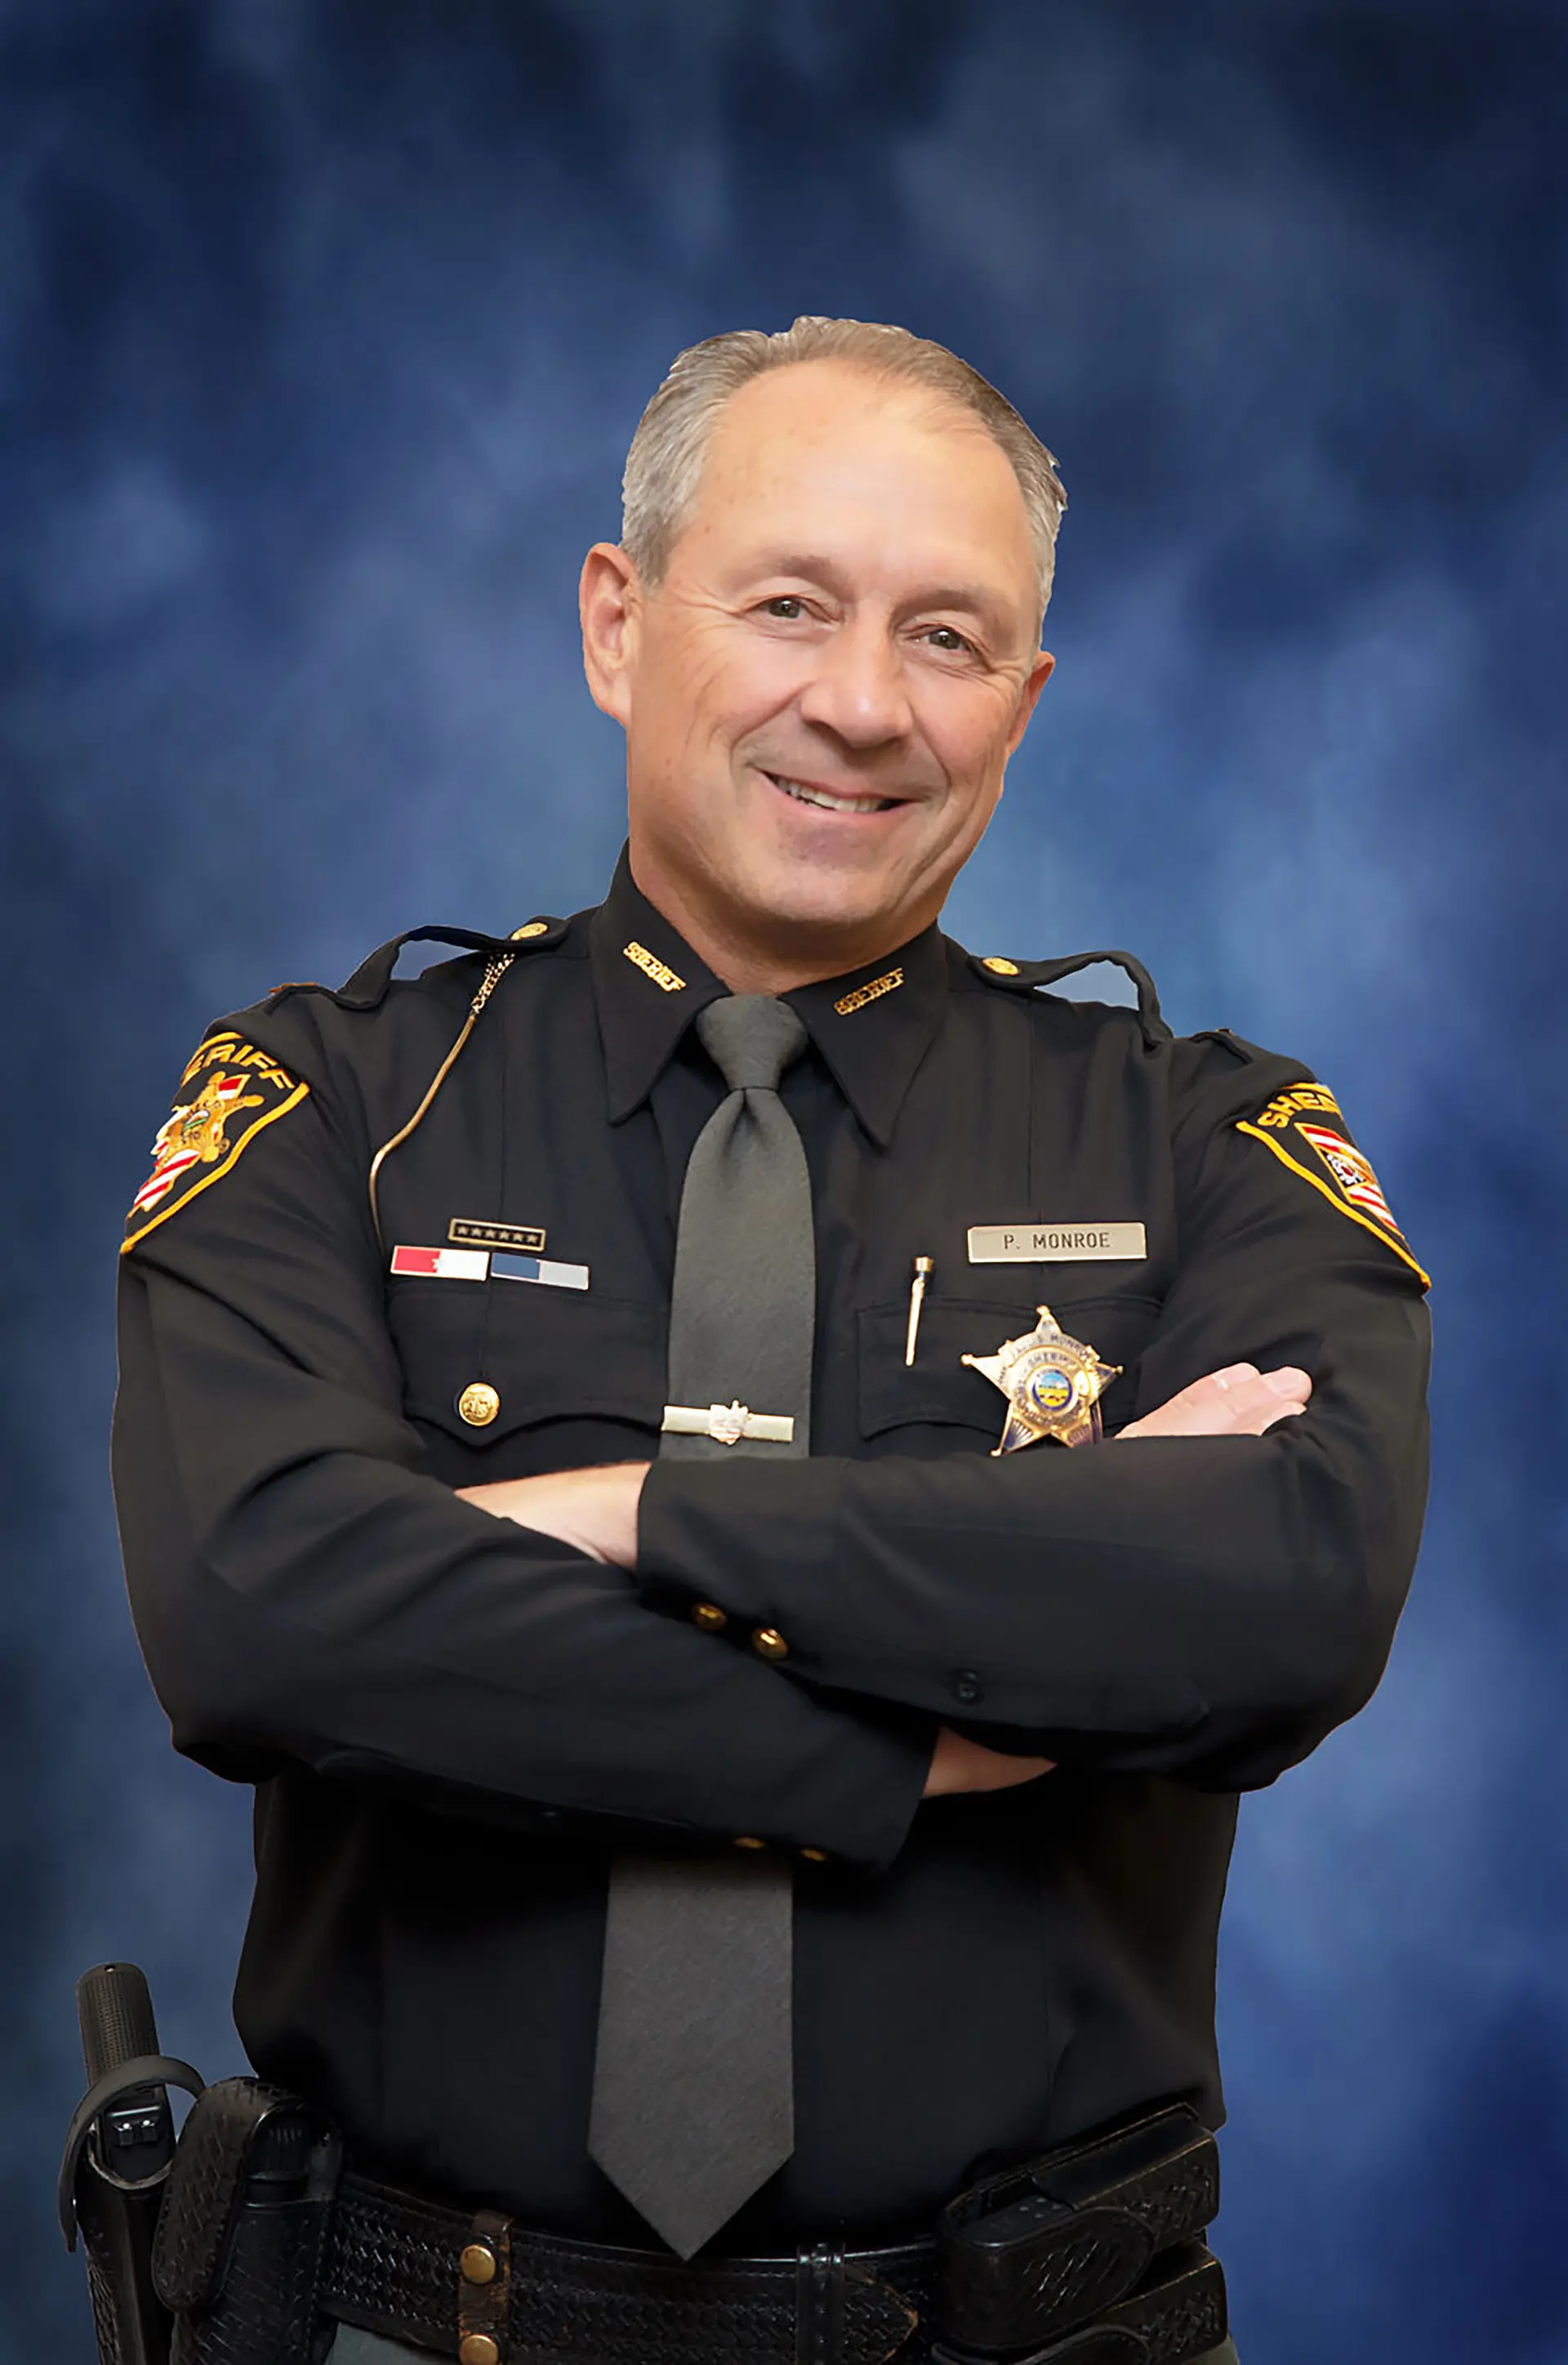 Sheriff Paul Monroe